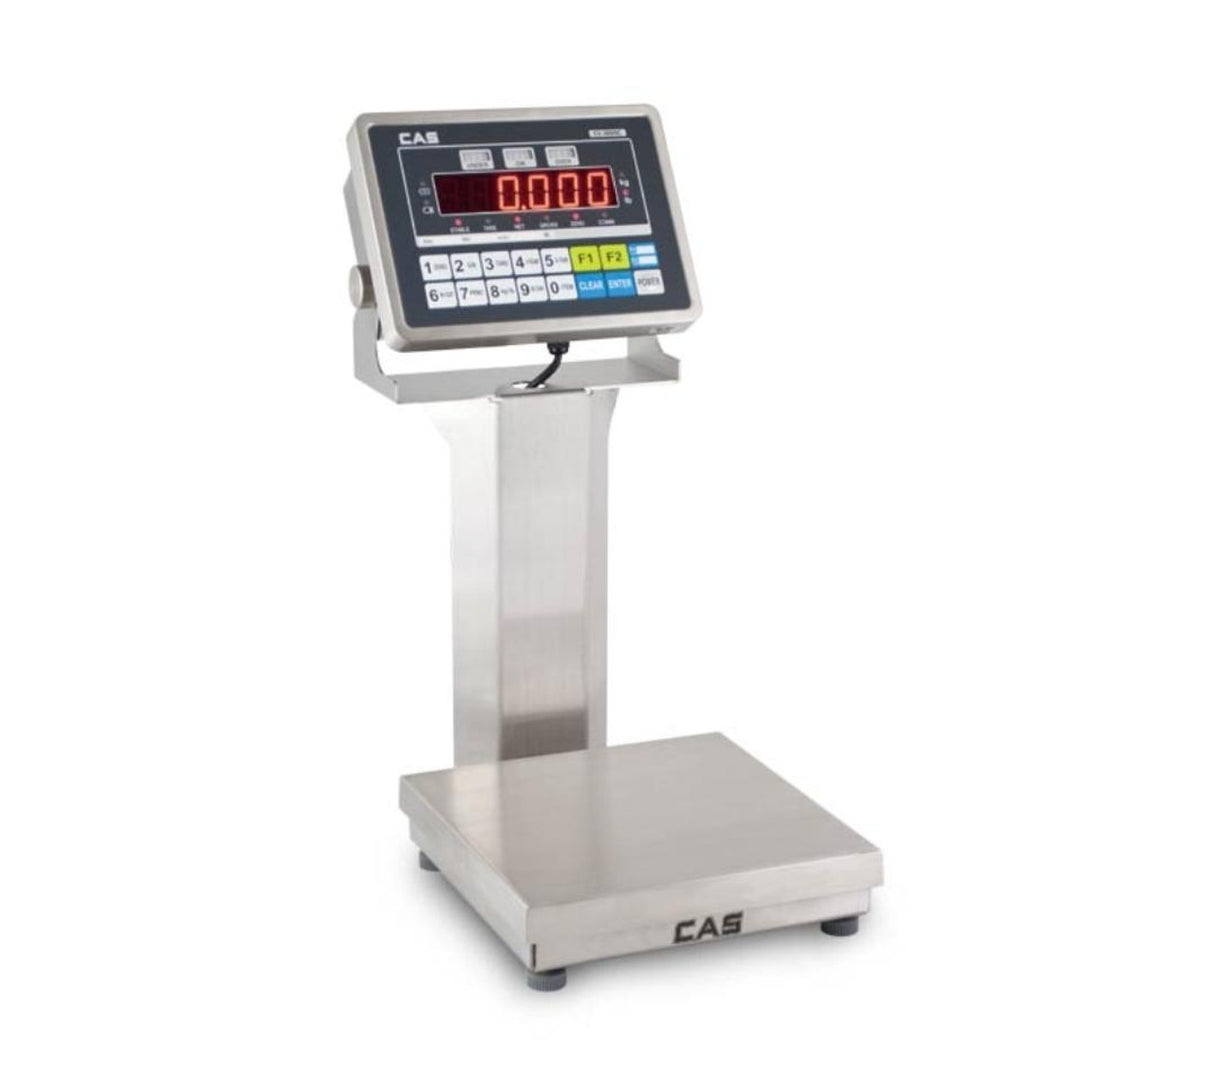 CAS GP-15100SC Enduro Checkweighing Scale, 15" x 15", NTEP, 100 lb Capacity, 0.01 lb Readability